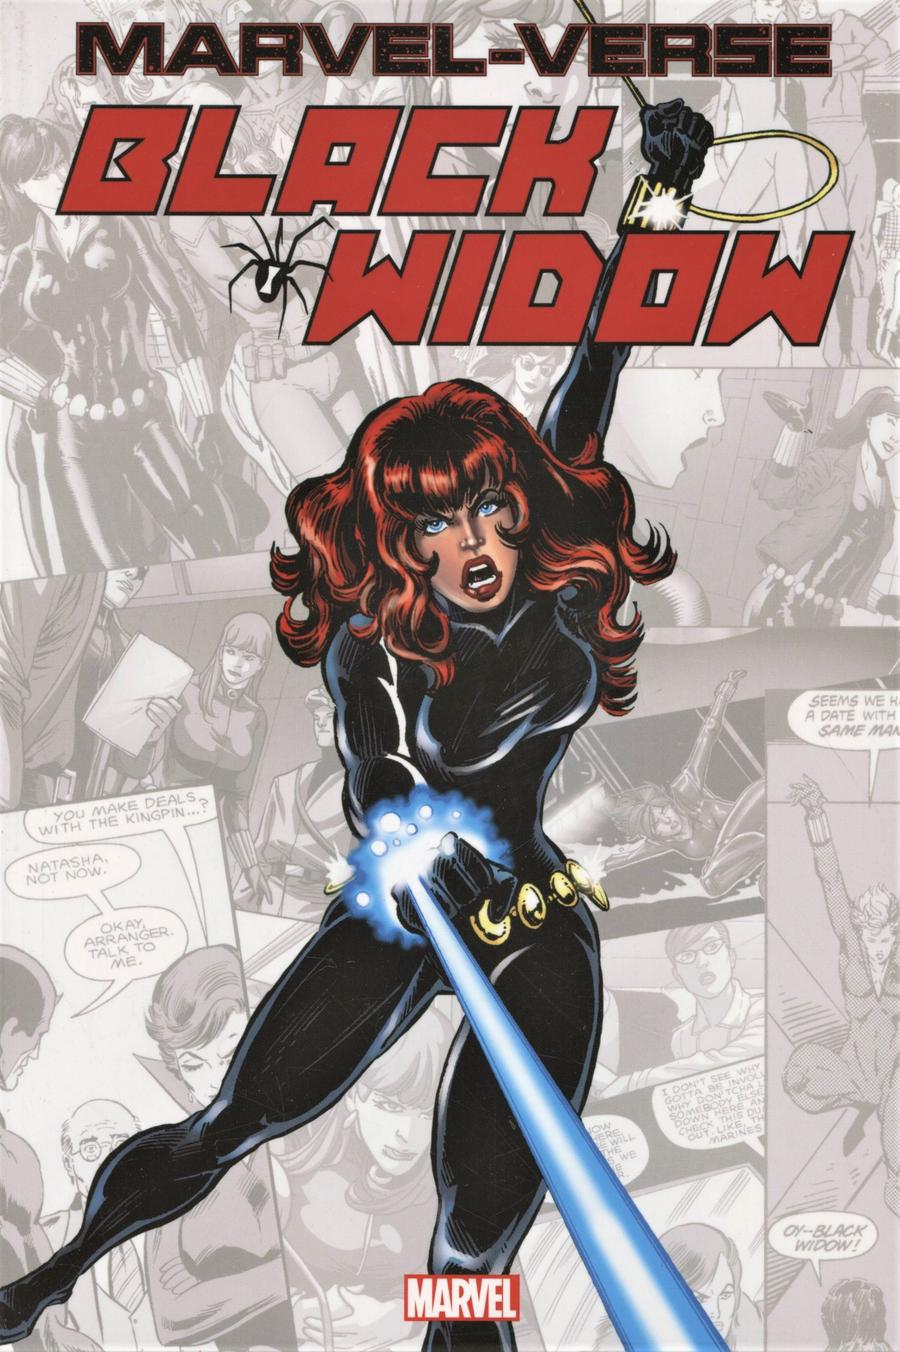 Marvel-Verse Black Widow GN